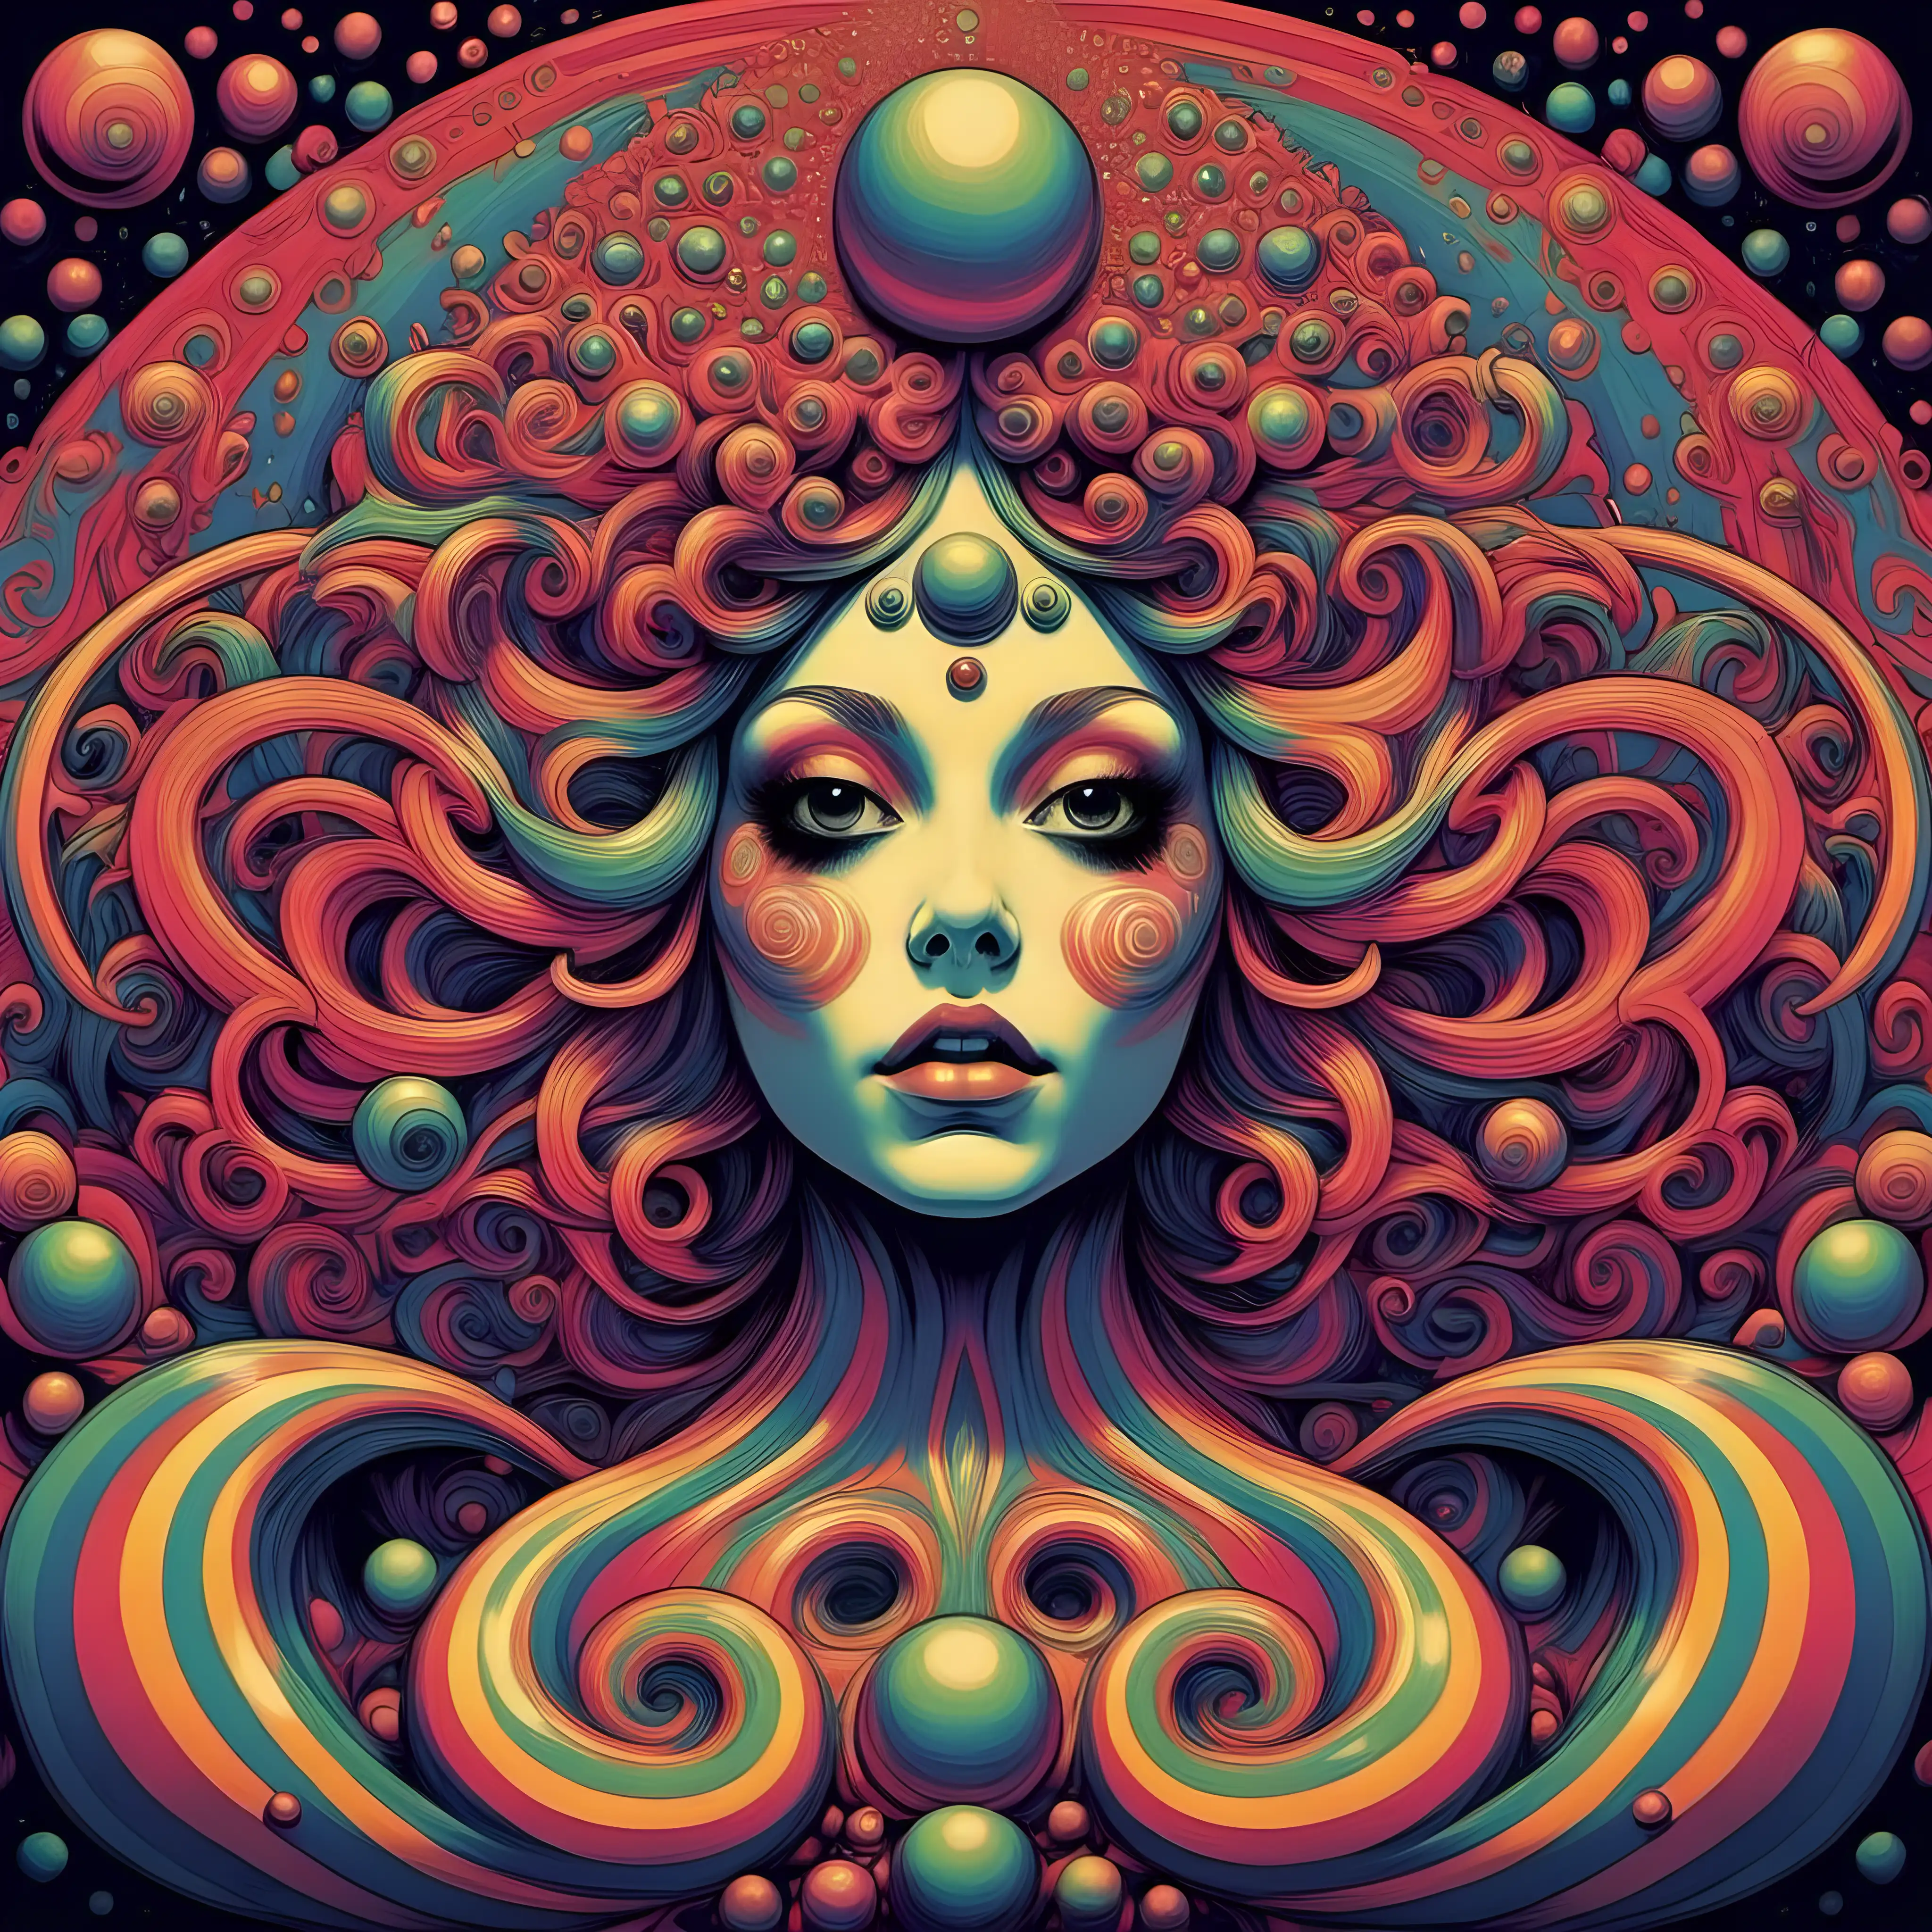 octaphenia, psychedelic; vargas style artwork

